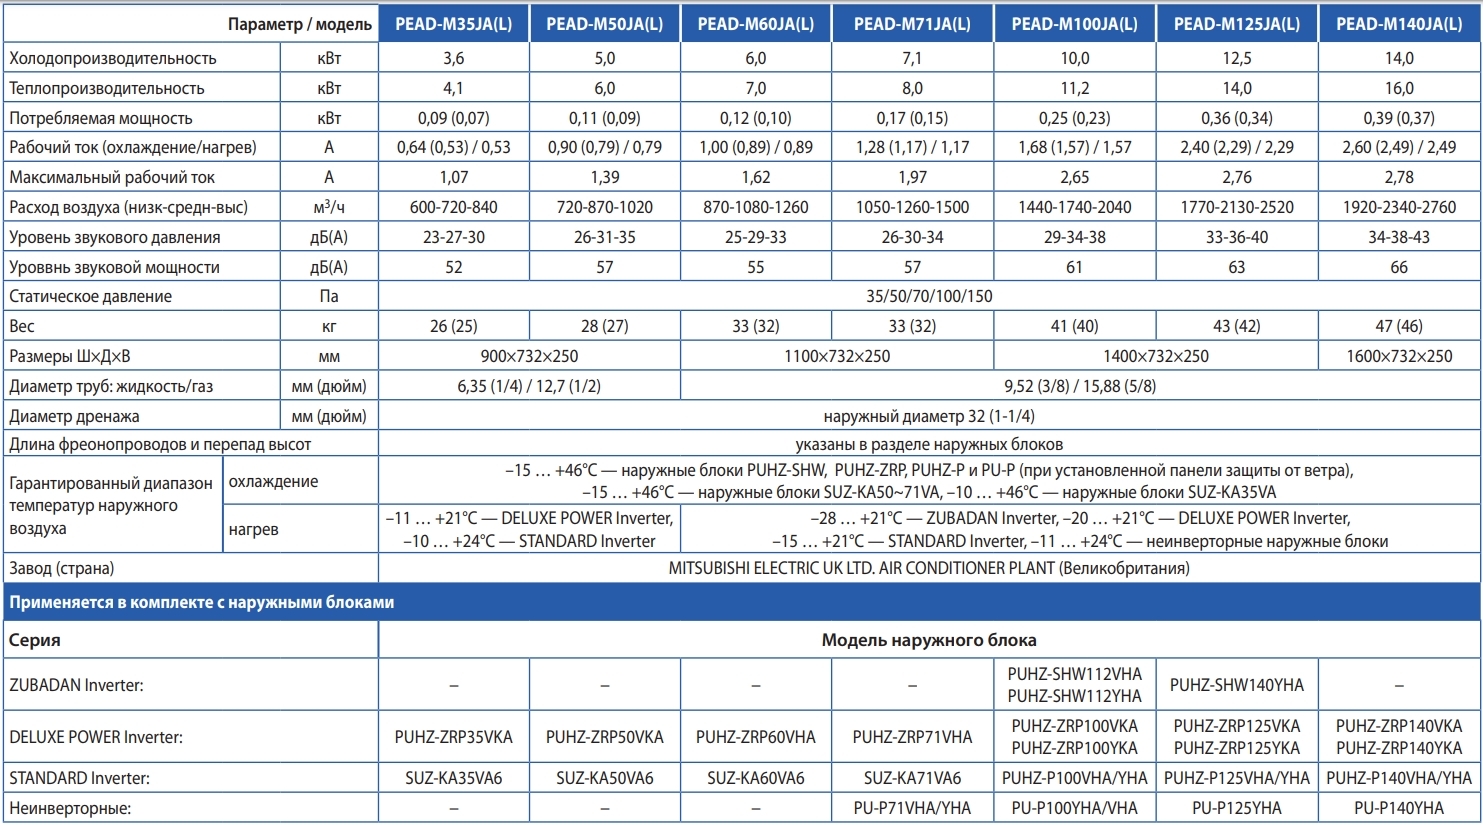 Mitsubishi Electric PEAD-M140JA/PUHZ-P140VKA Характеристики